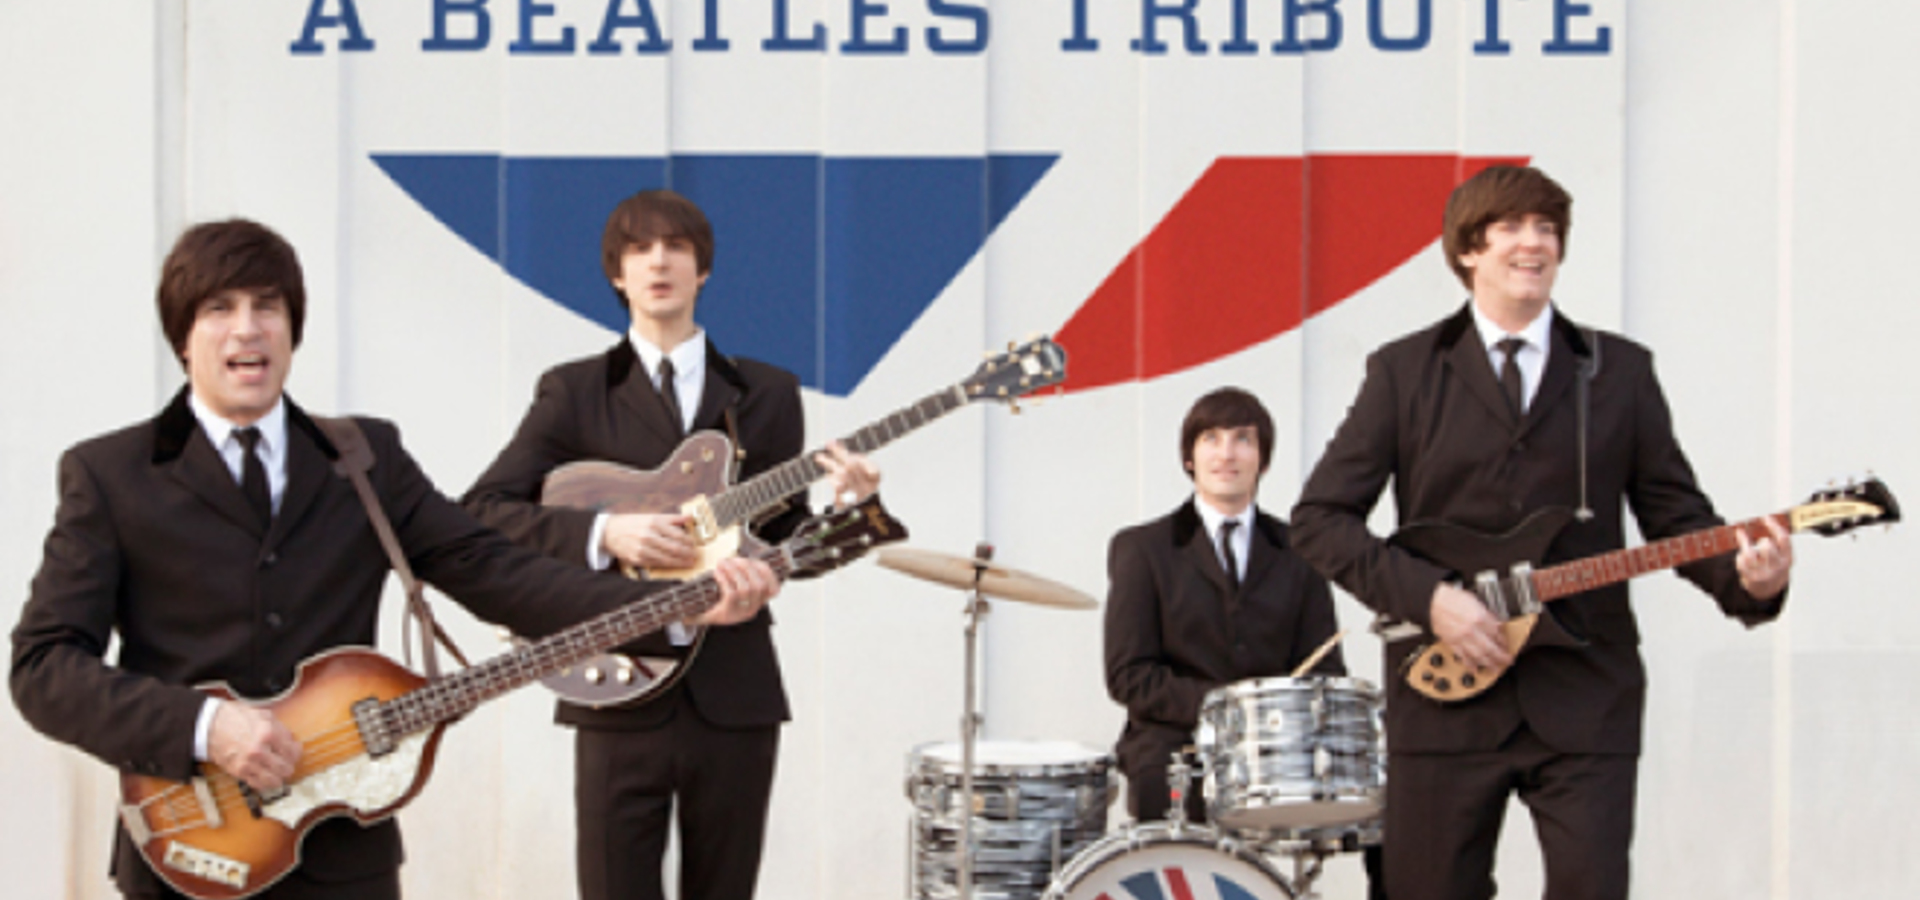 Help! A Beatles Tribute Band